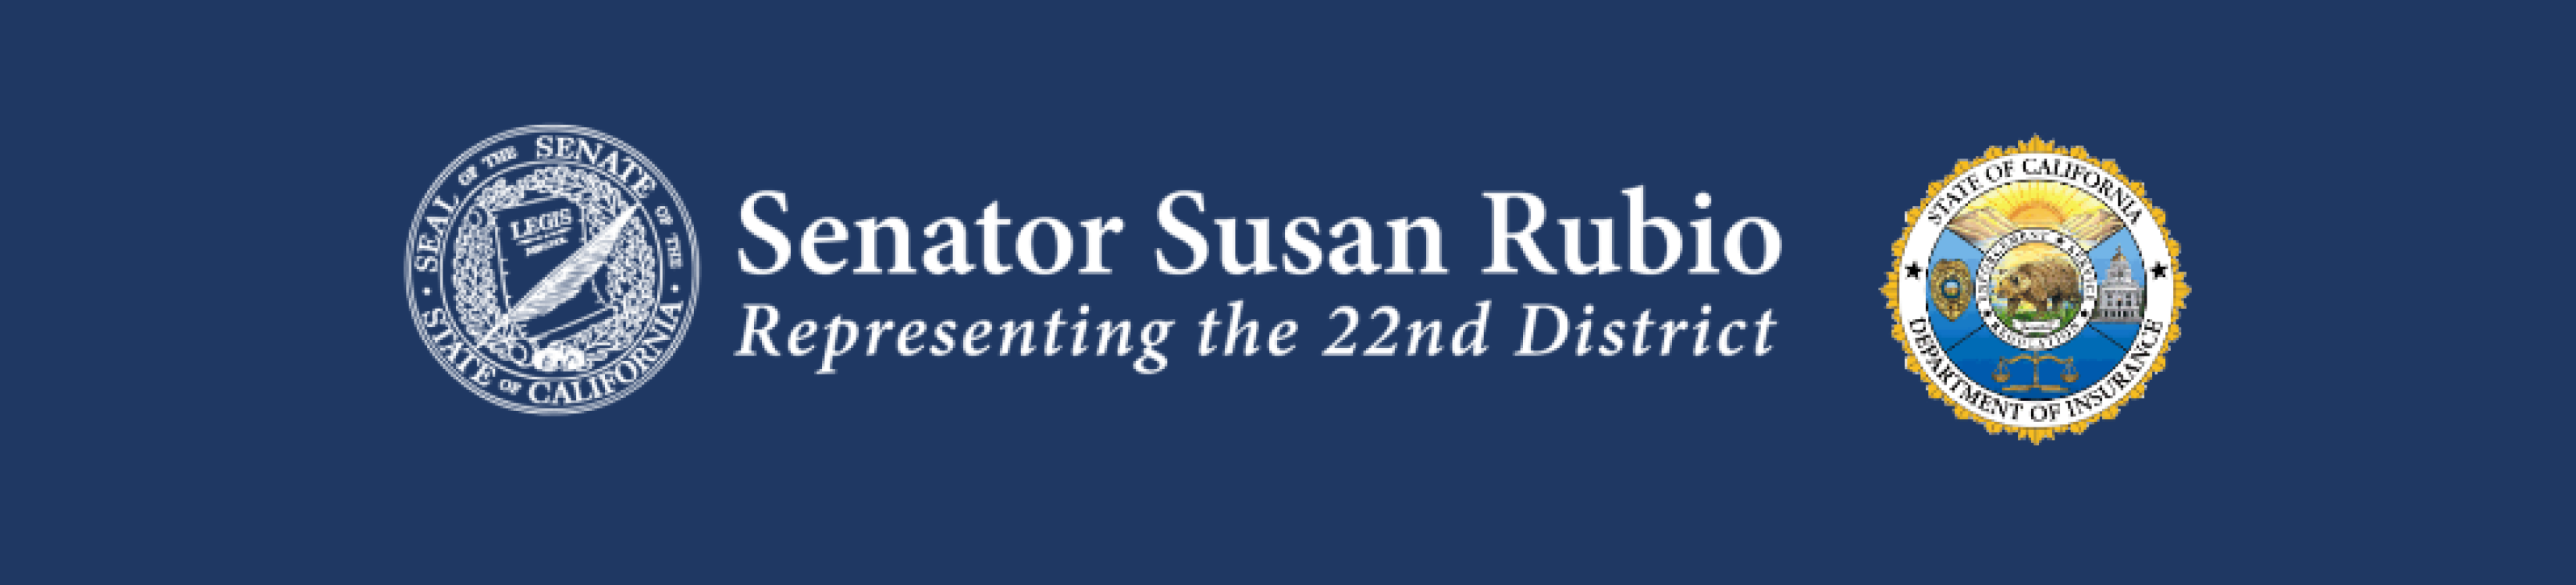 Logo, Senator Susan Rubio Representing the 22nd District, CDI Logo